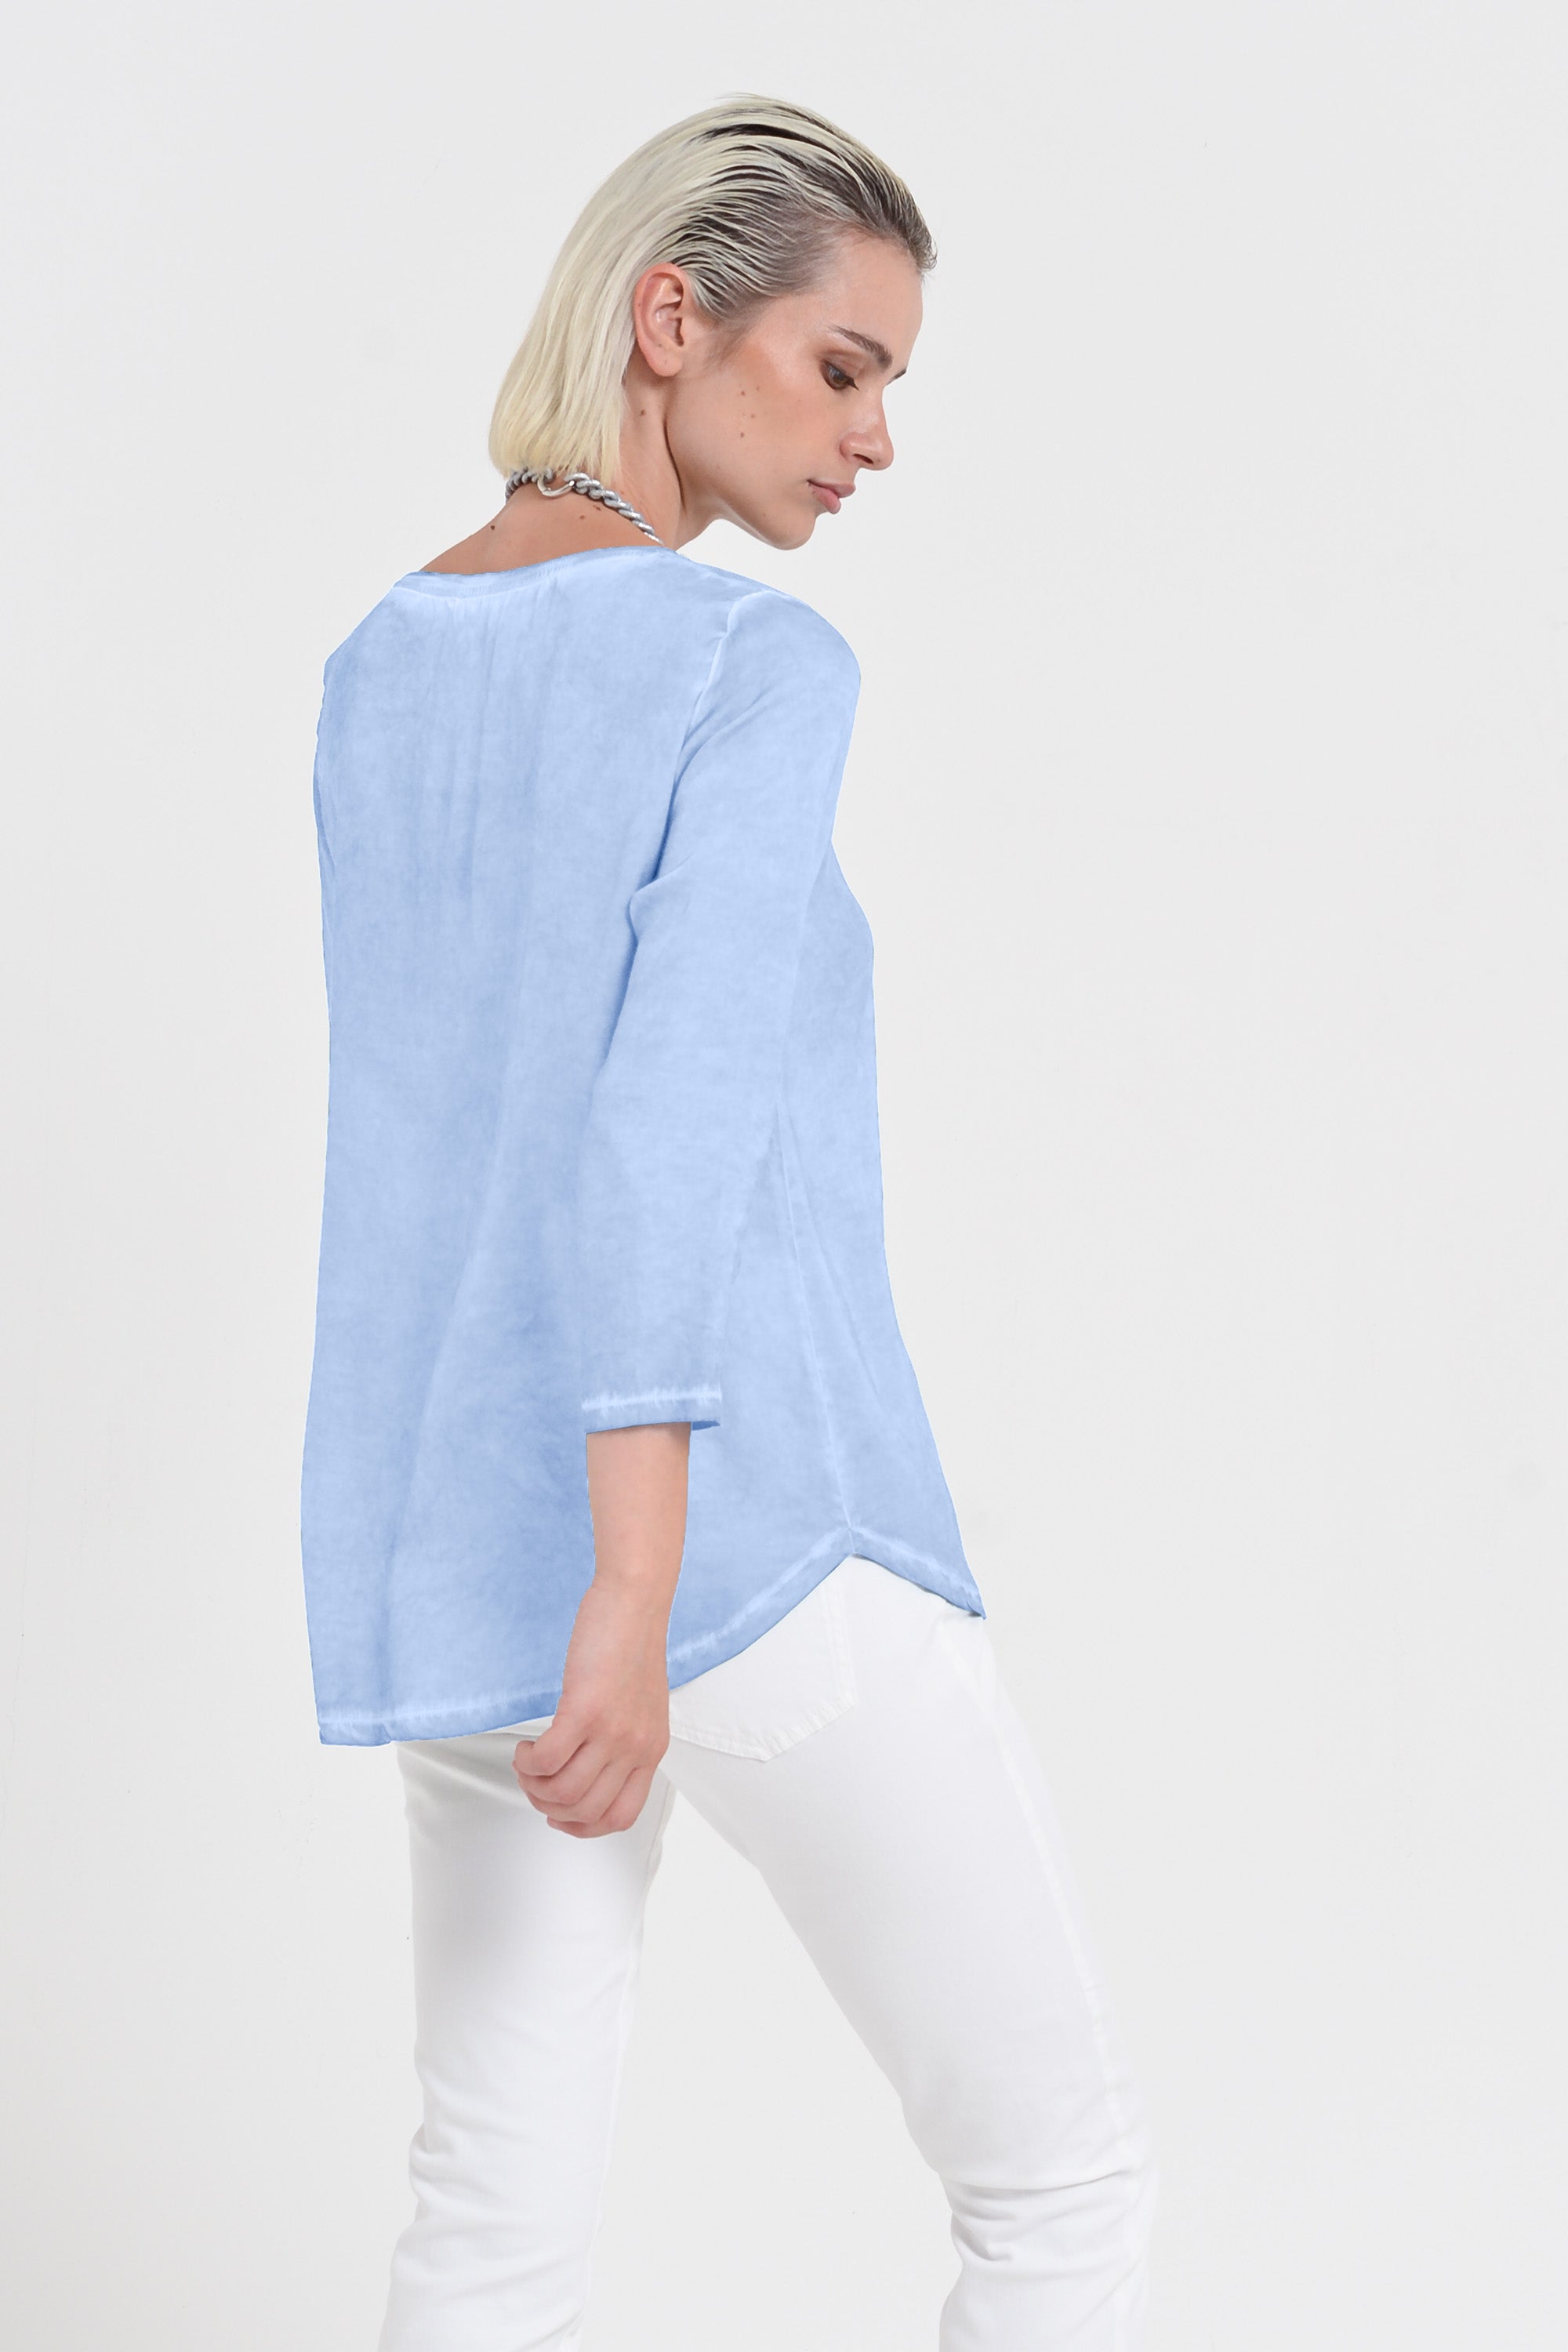 Daytona T-shirt - Women's Short Sleeve Satin T-Shirt - Cielo